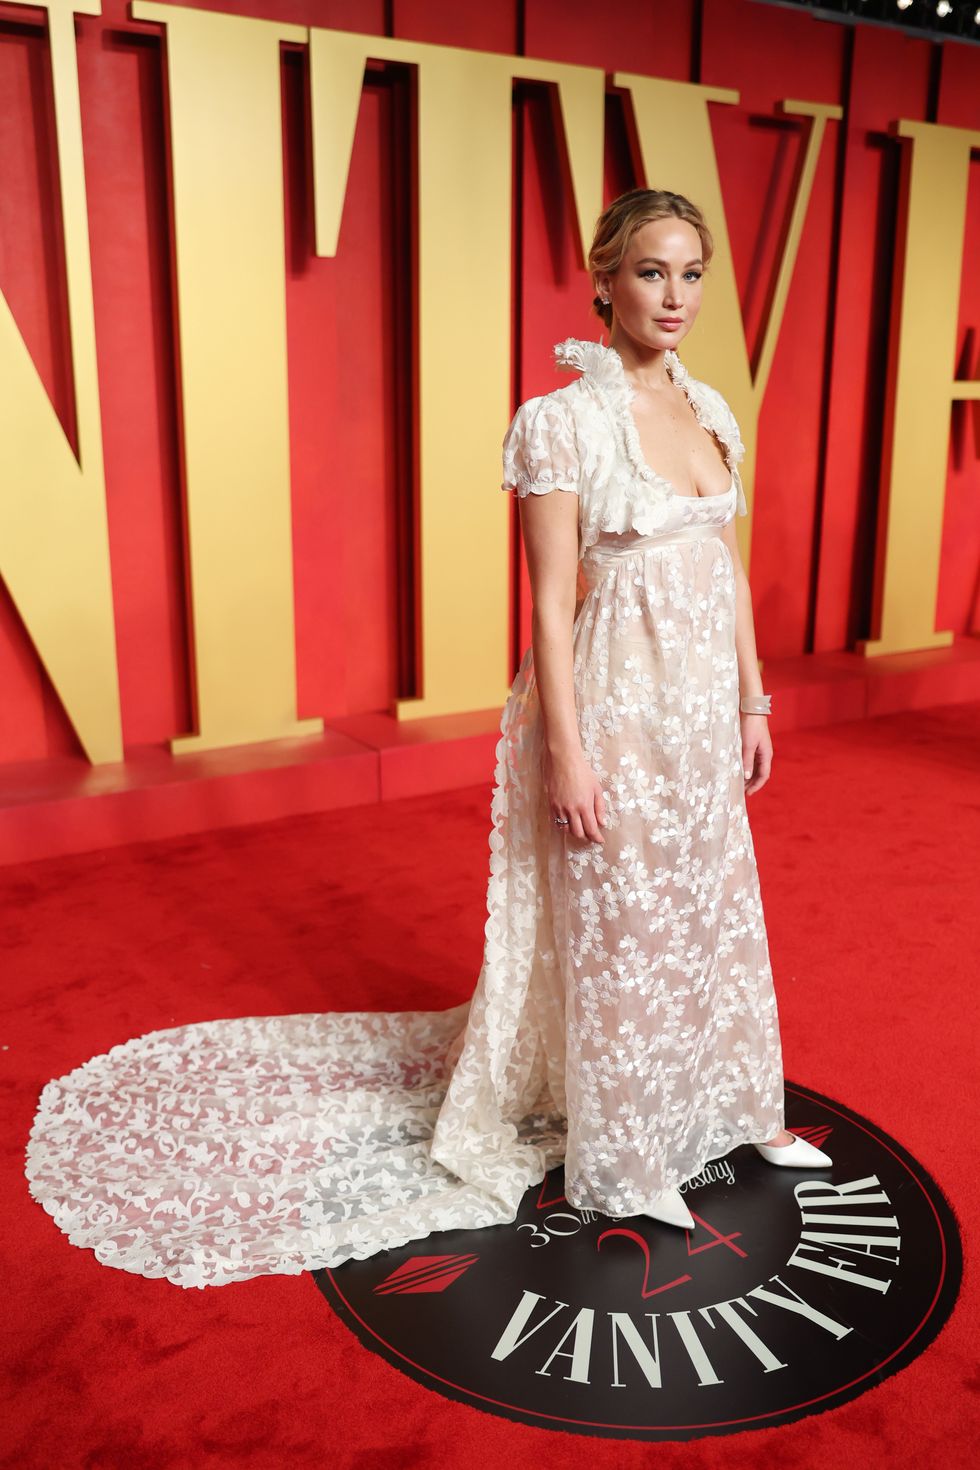 Jennifer Lawrence Is the Diamond of the Season in This Bridgerton-esque Dress